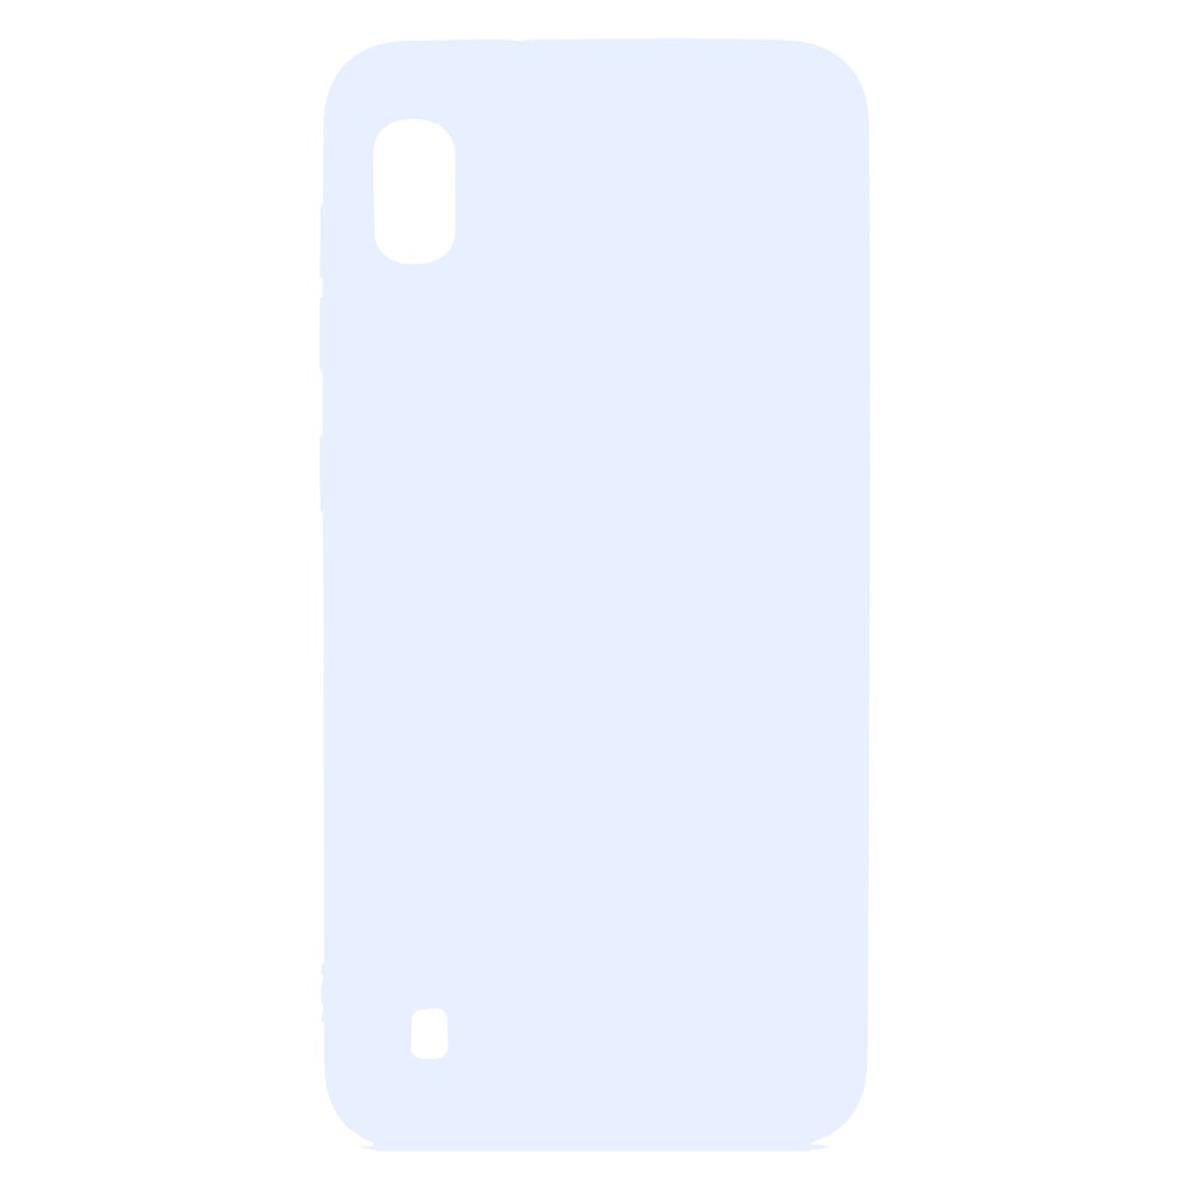 Hülle für Samsung Galaxy A10 Silikon Cover Bumper Schutzhülle Case matt weiß